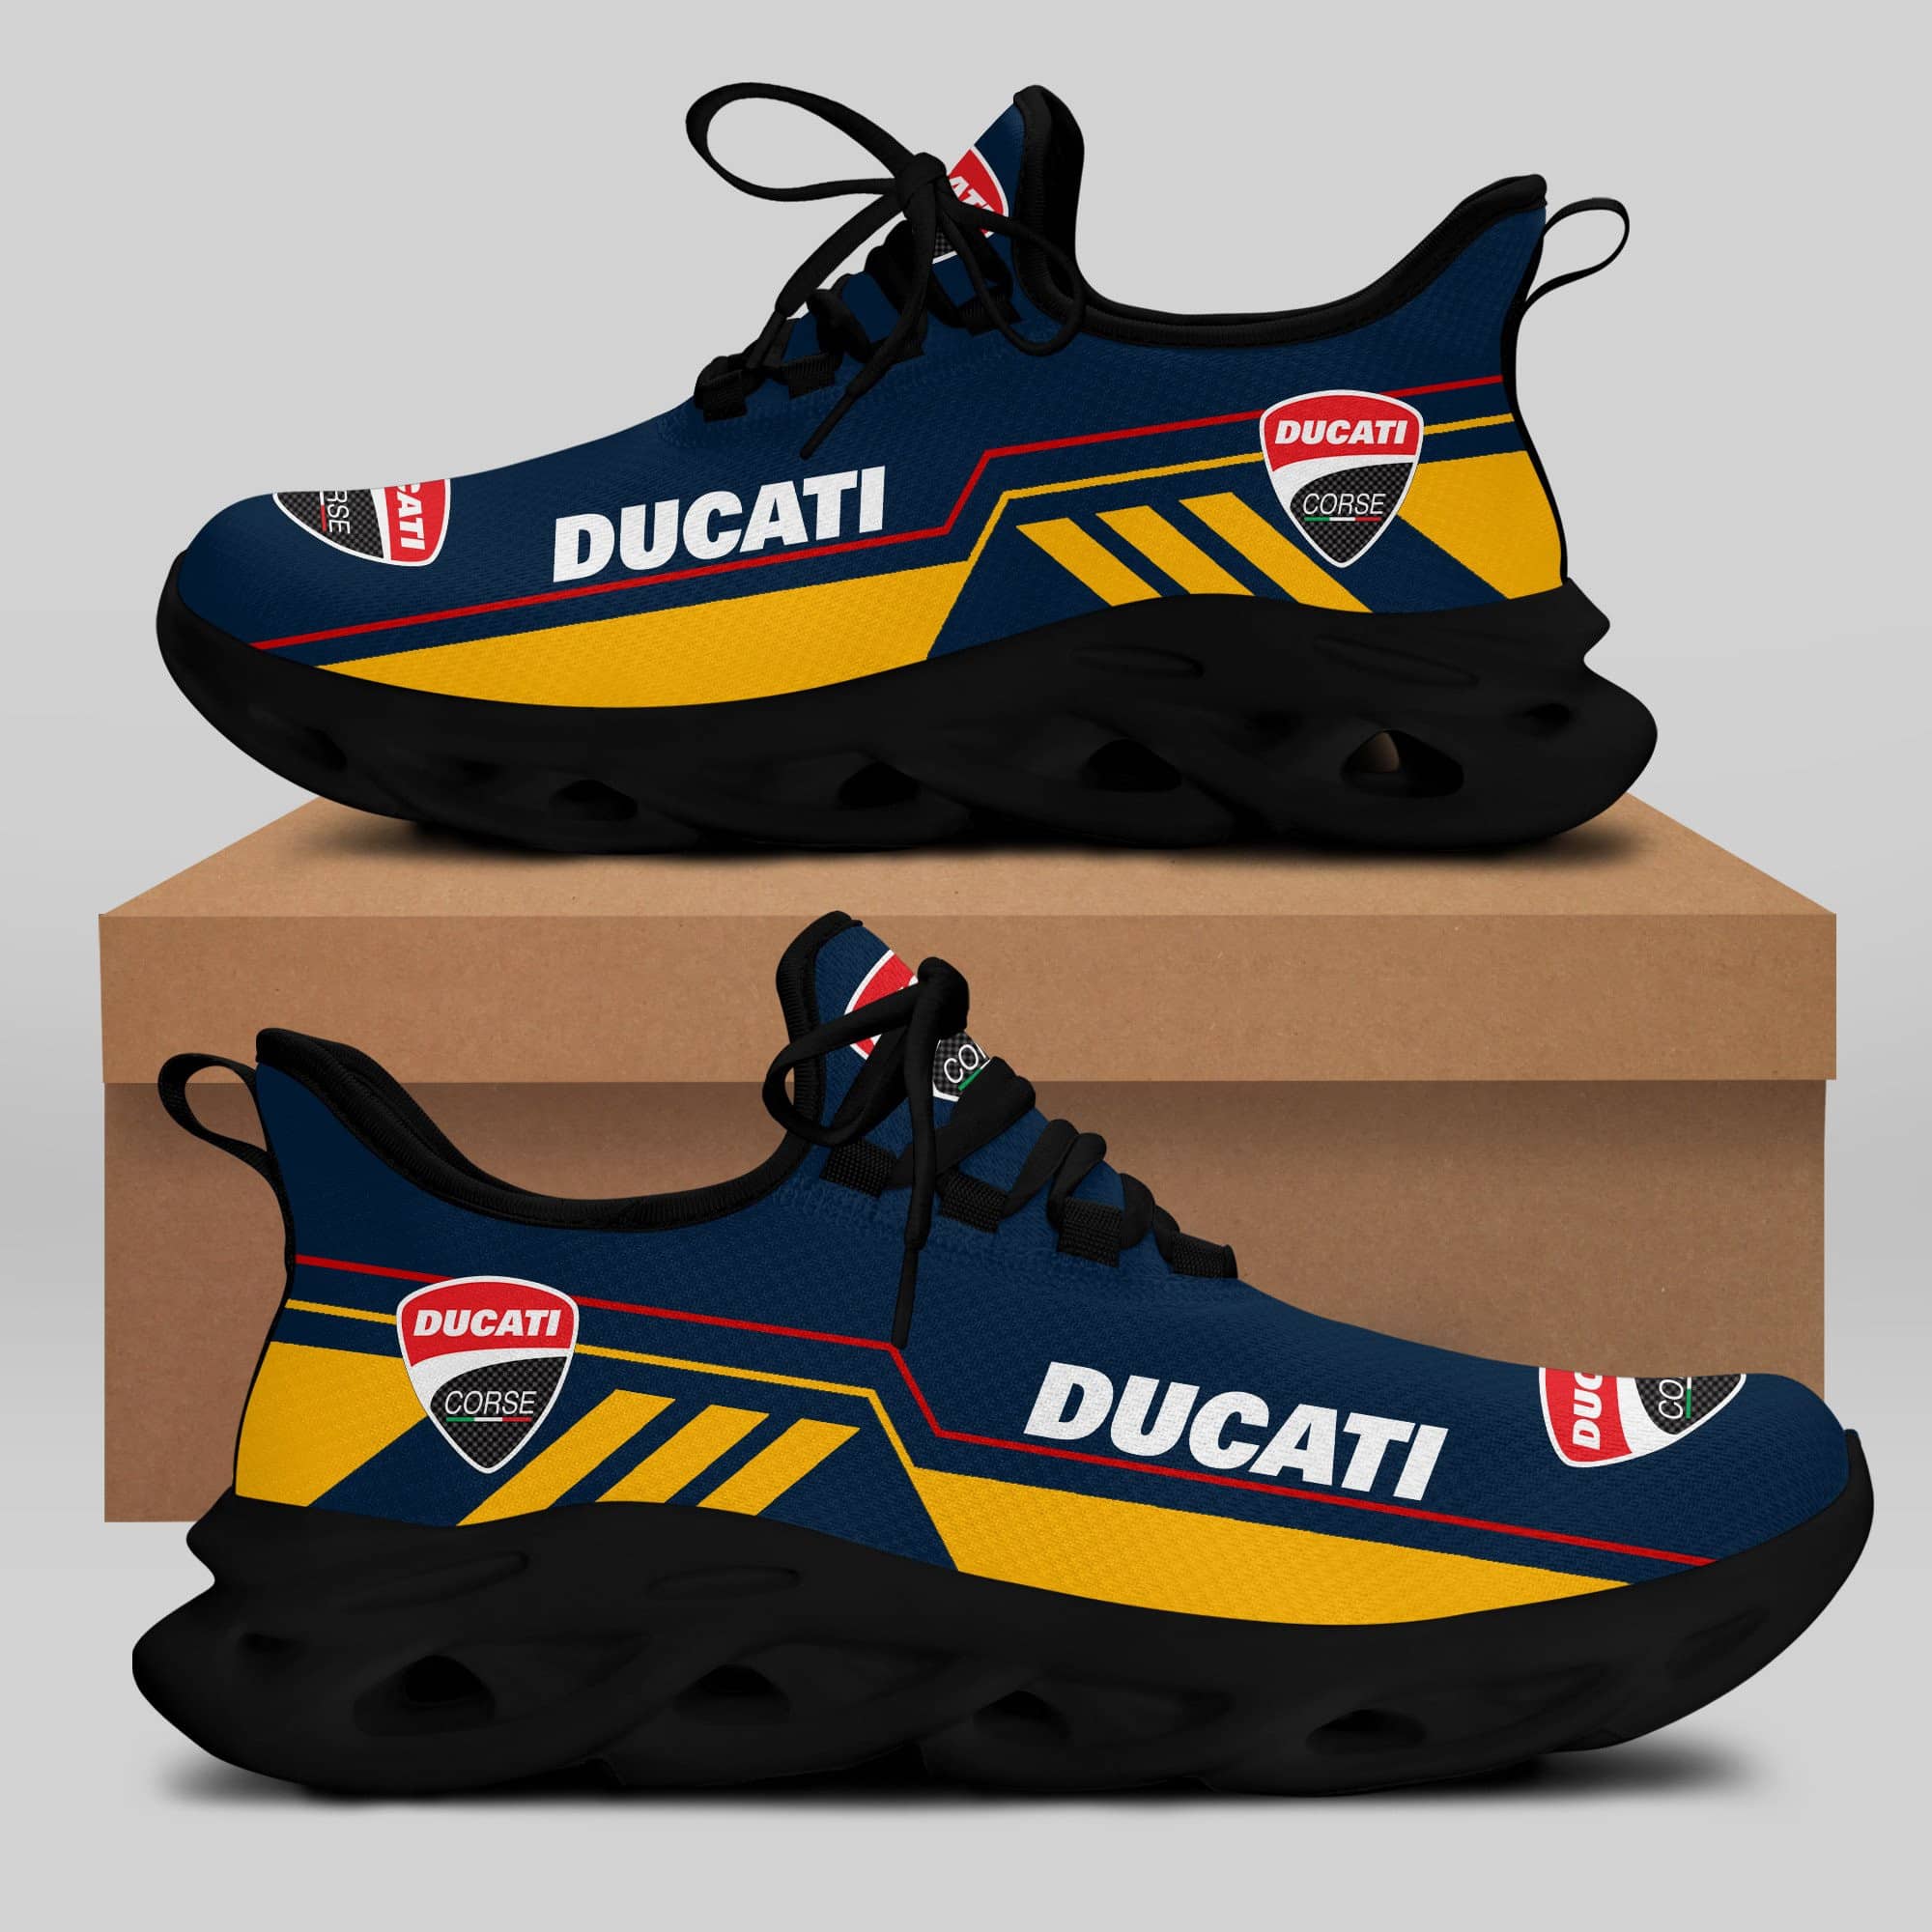 Ducati Racing Running Shoes Max Soul Shoes Sneakers Ver 50 1